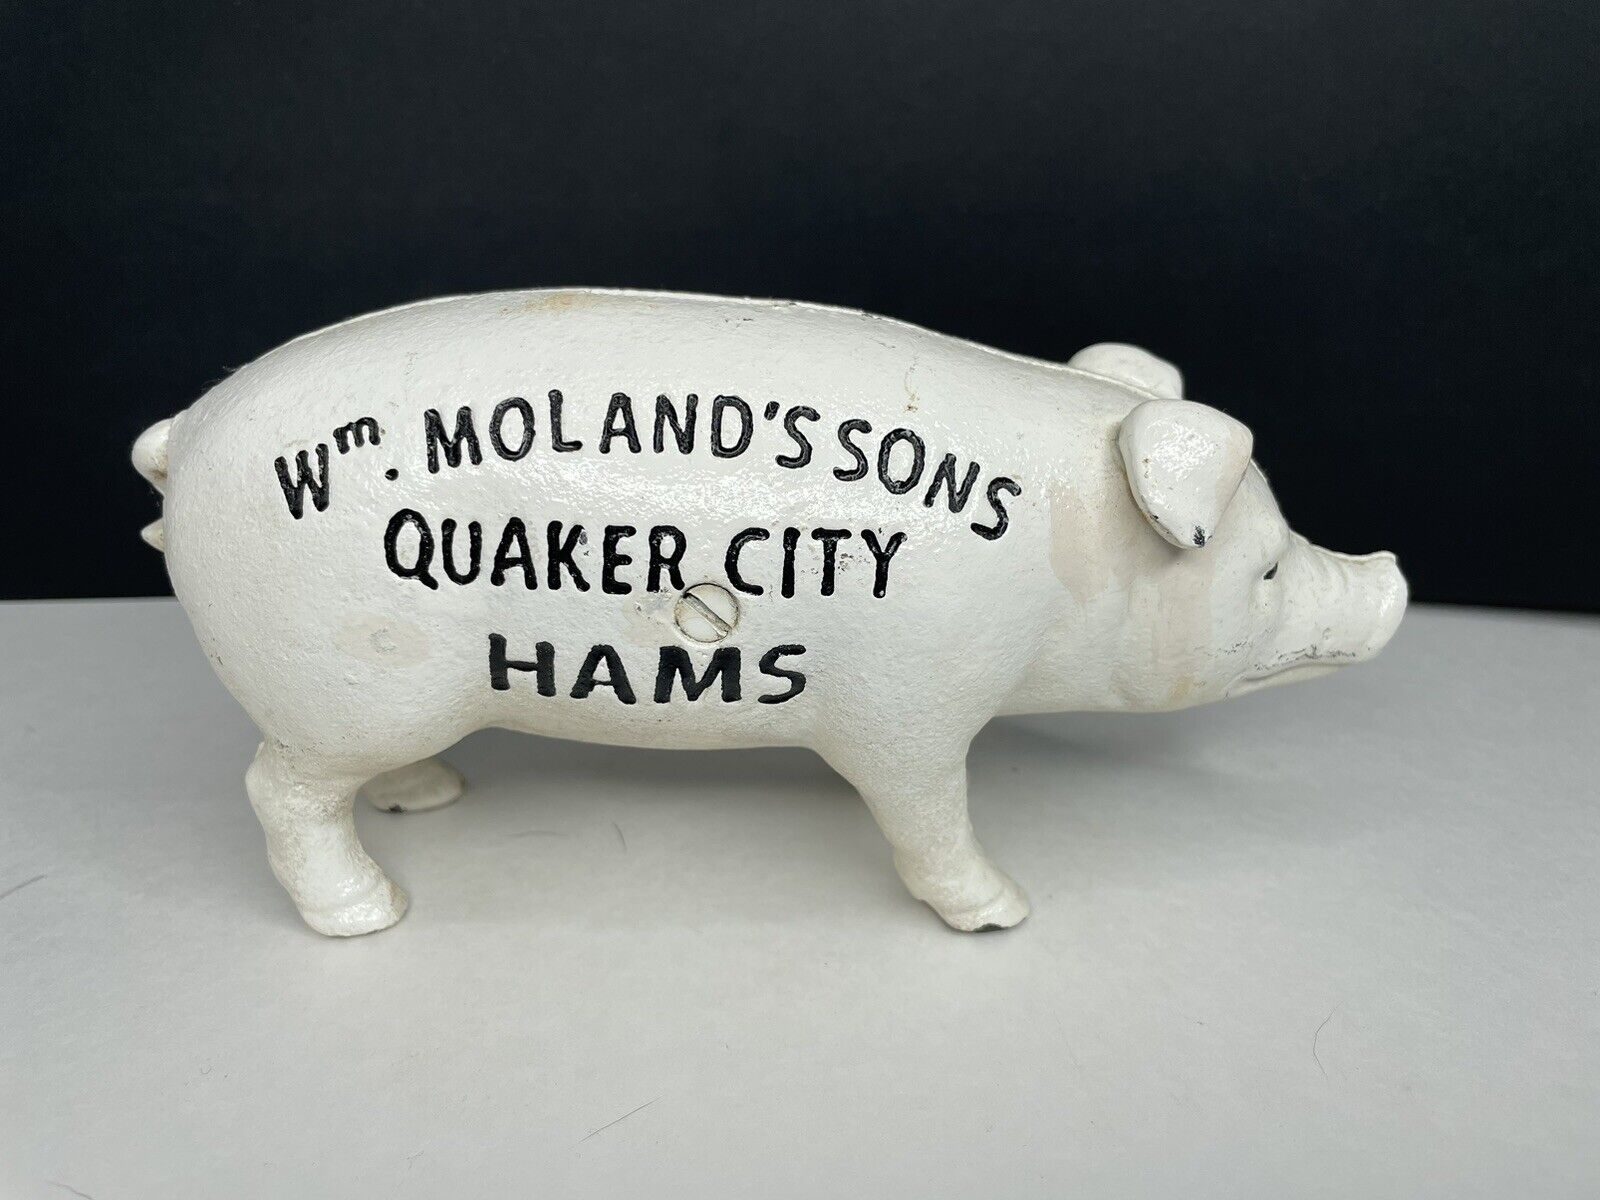 Vintage WM MOLAND’S SONS QUAKER CITY HAMS Advertising Piggy Bank Cast Iron